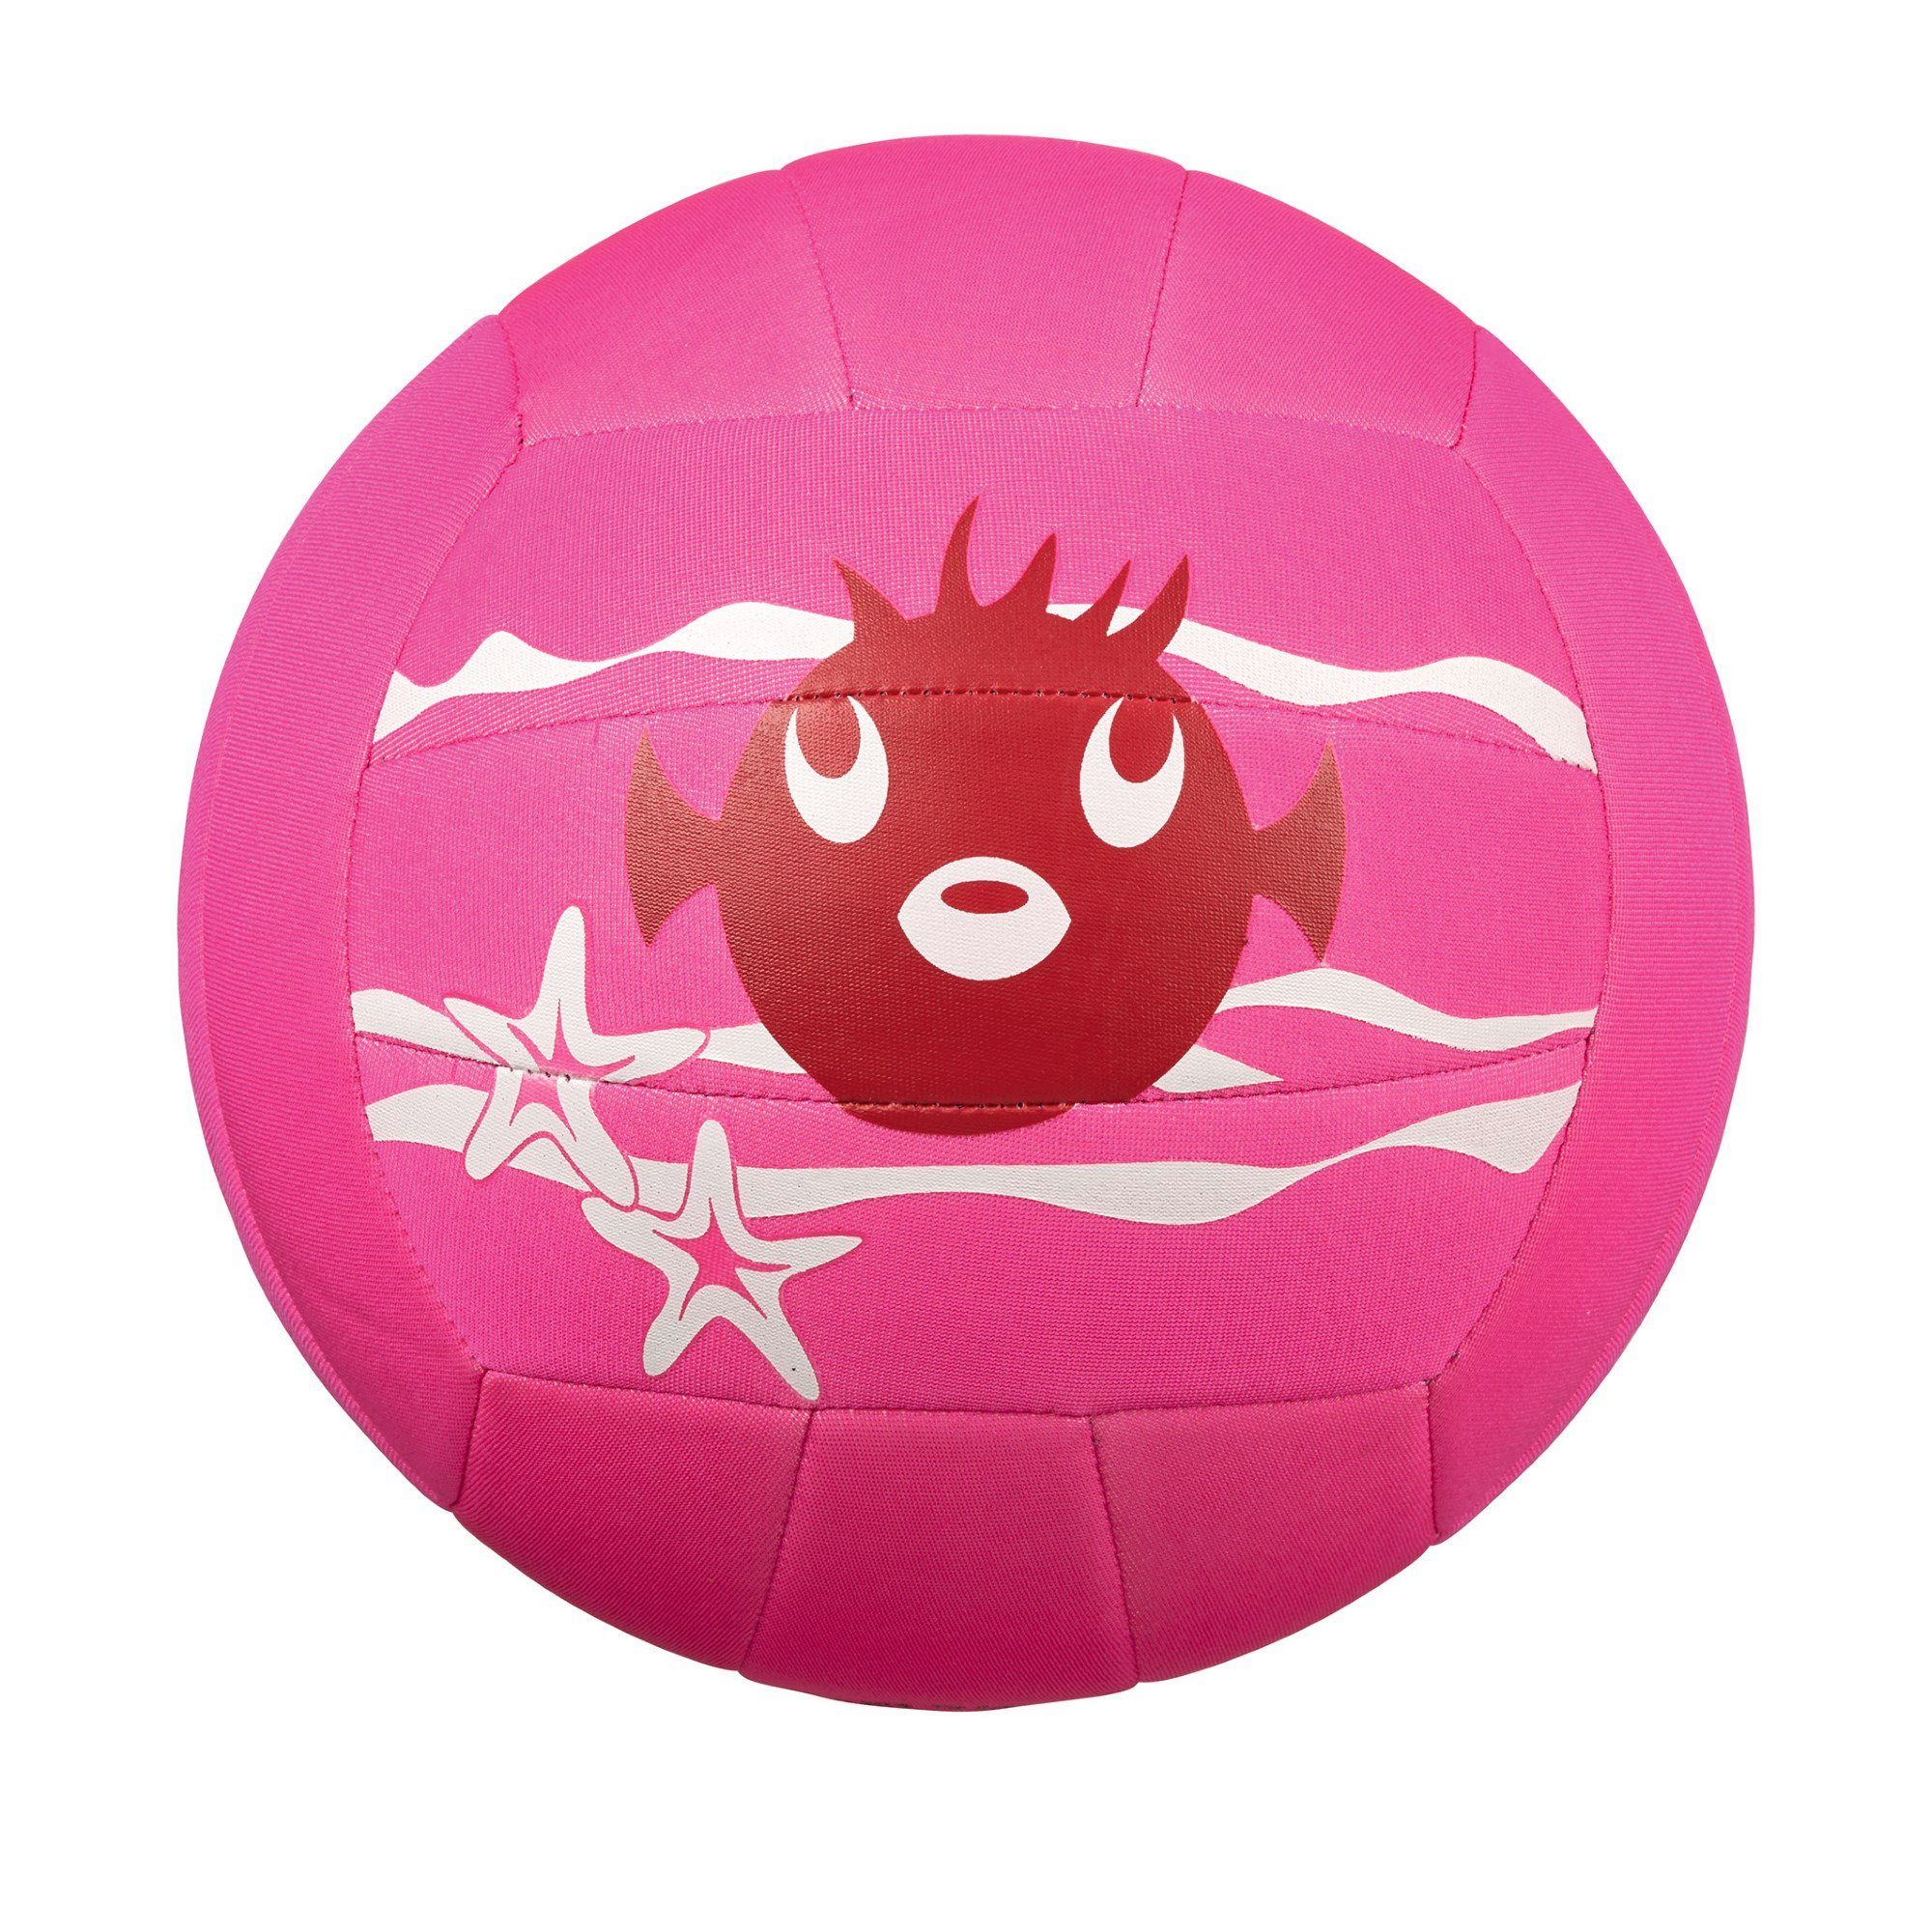 Beco Beermann Spielball BECO SEALIFE Neopren Beach Ball 21cm pink